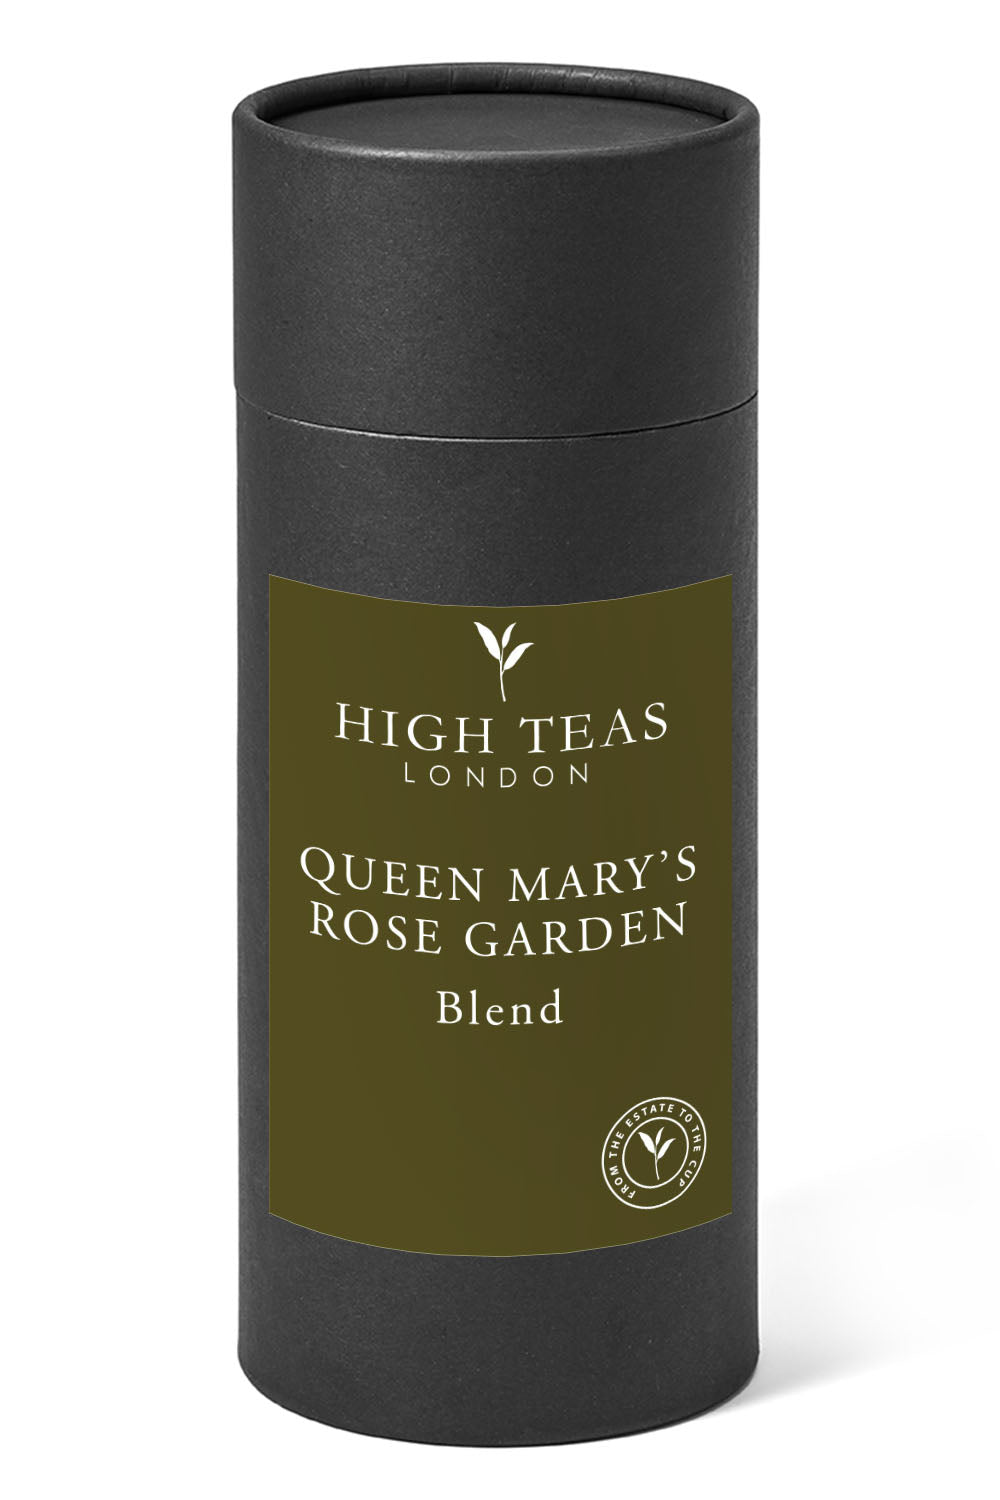 Queen Mary's Rose Garden-150g gift-Loose Leaf Tea-High Teas